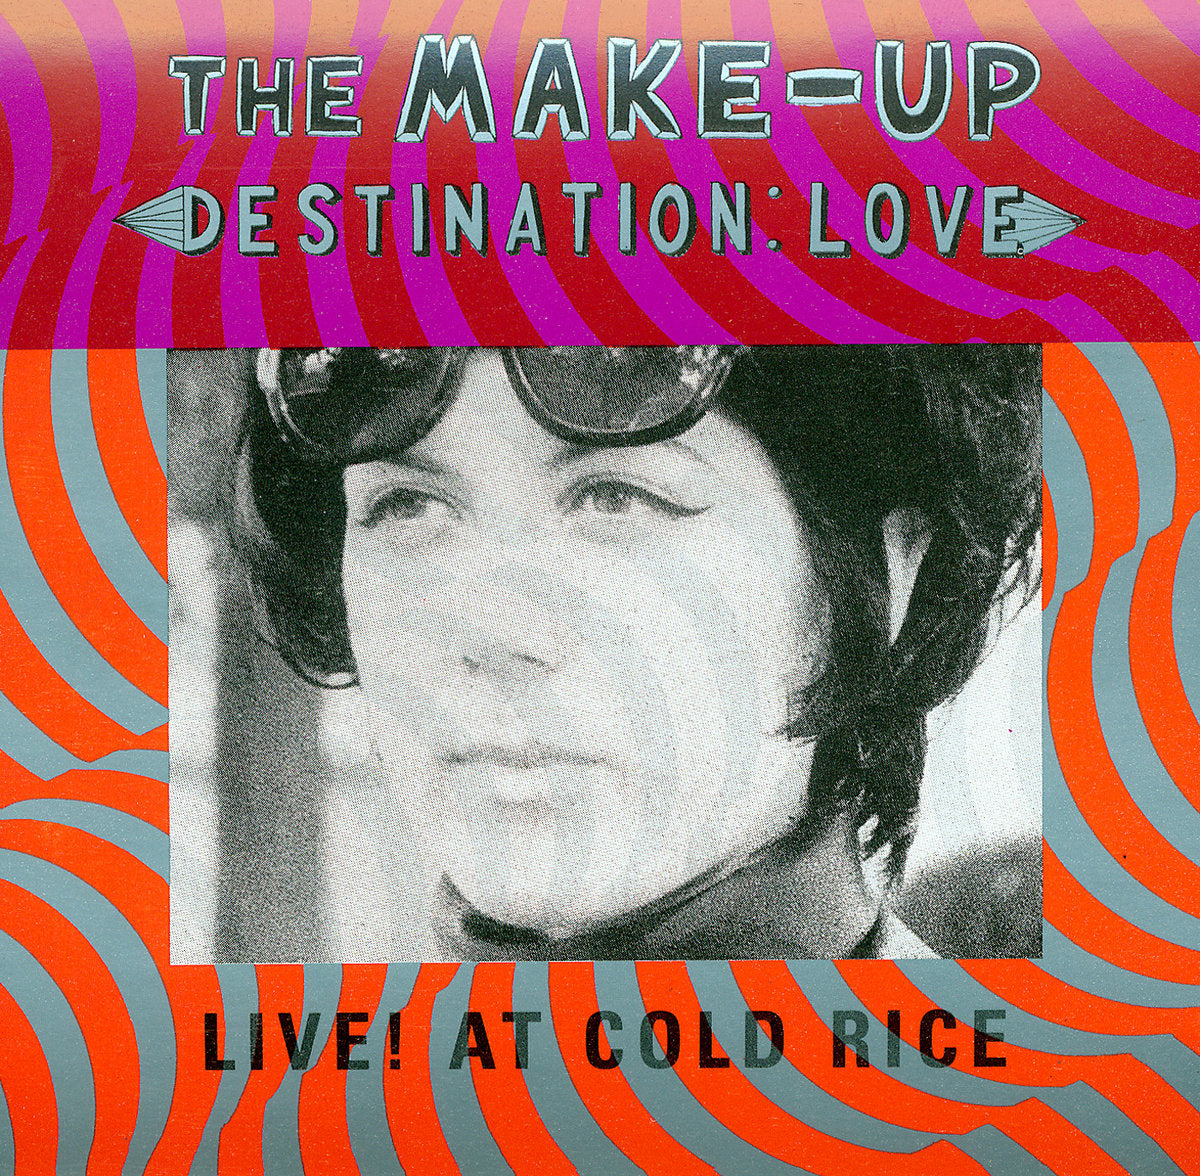 The Make-Up - Destination: Love Live! At Cold Rice LP